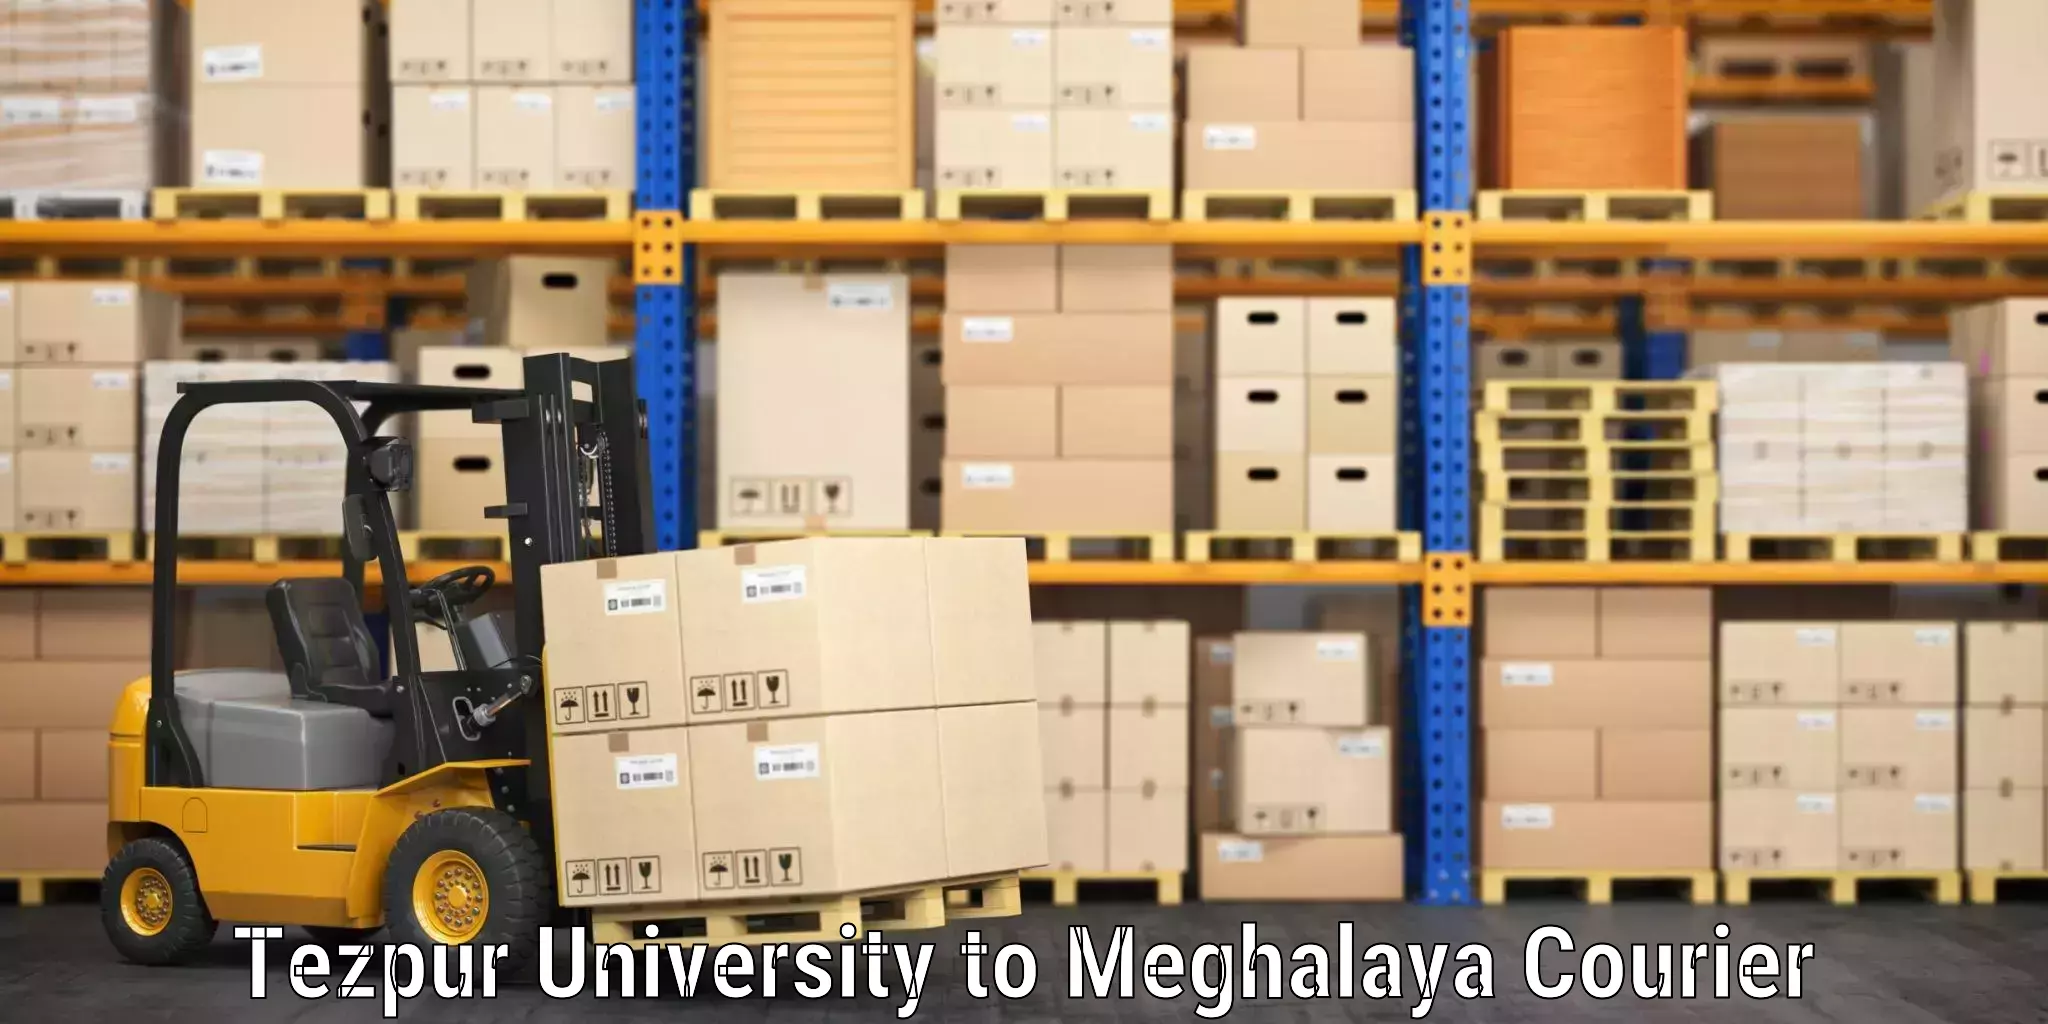 Luggage shipment specialists Tezpur University to Meghalaya